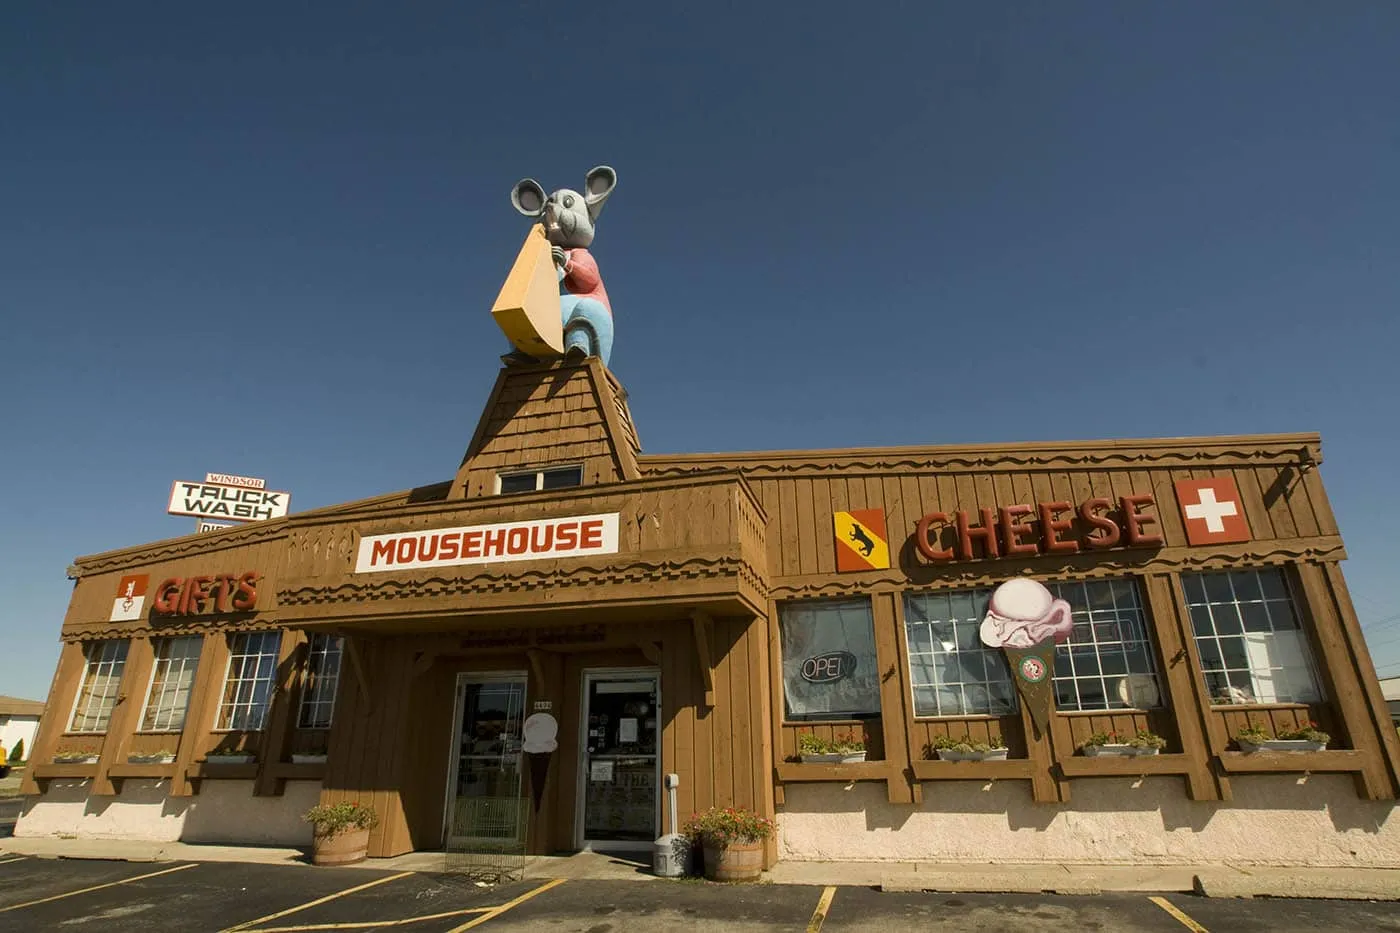 Mousehouse Cheesehaus in Windsor, Wisconsin -- Roadside Attractions in Wisconsin